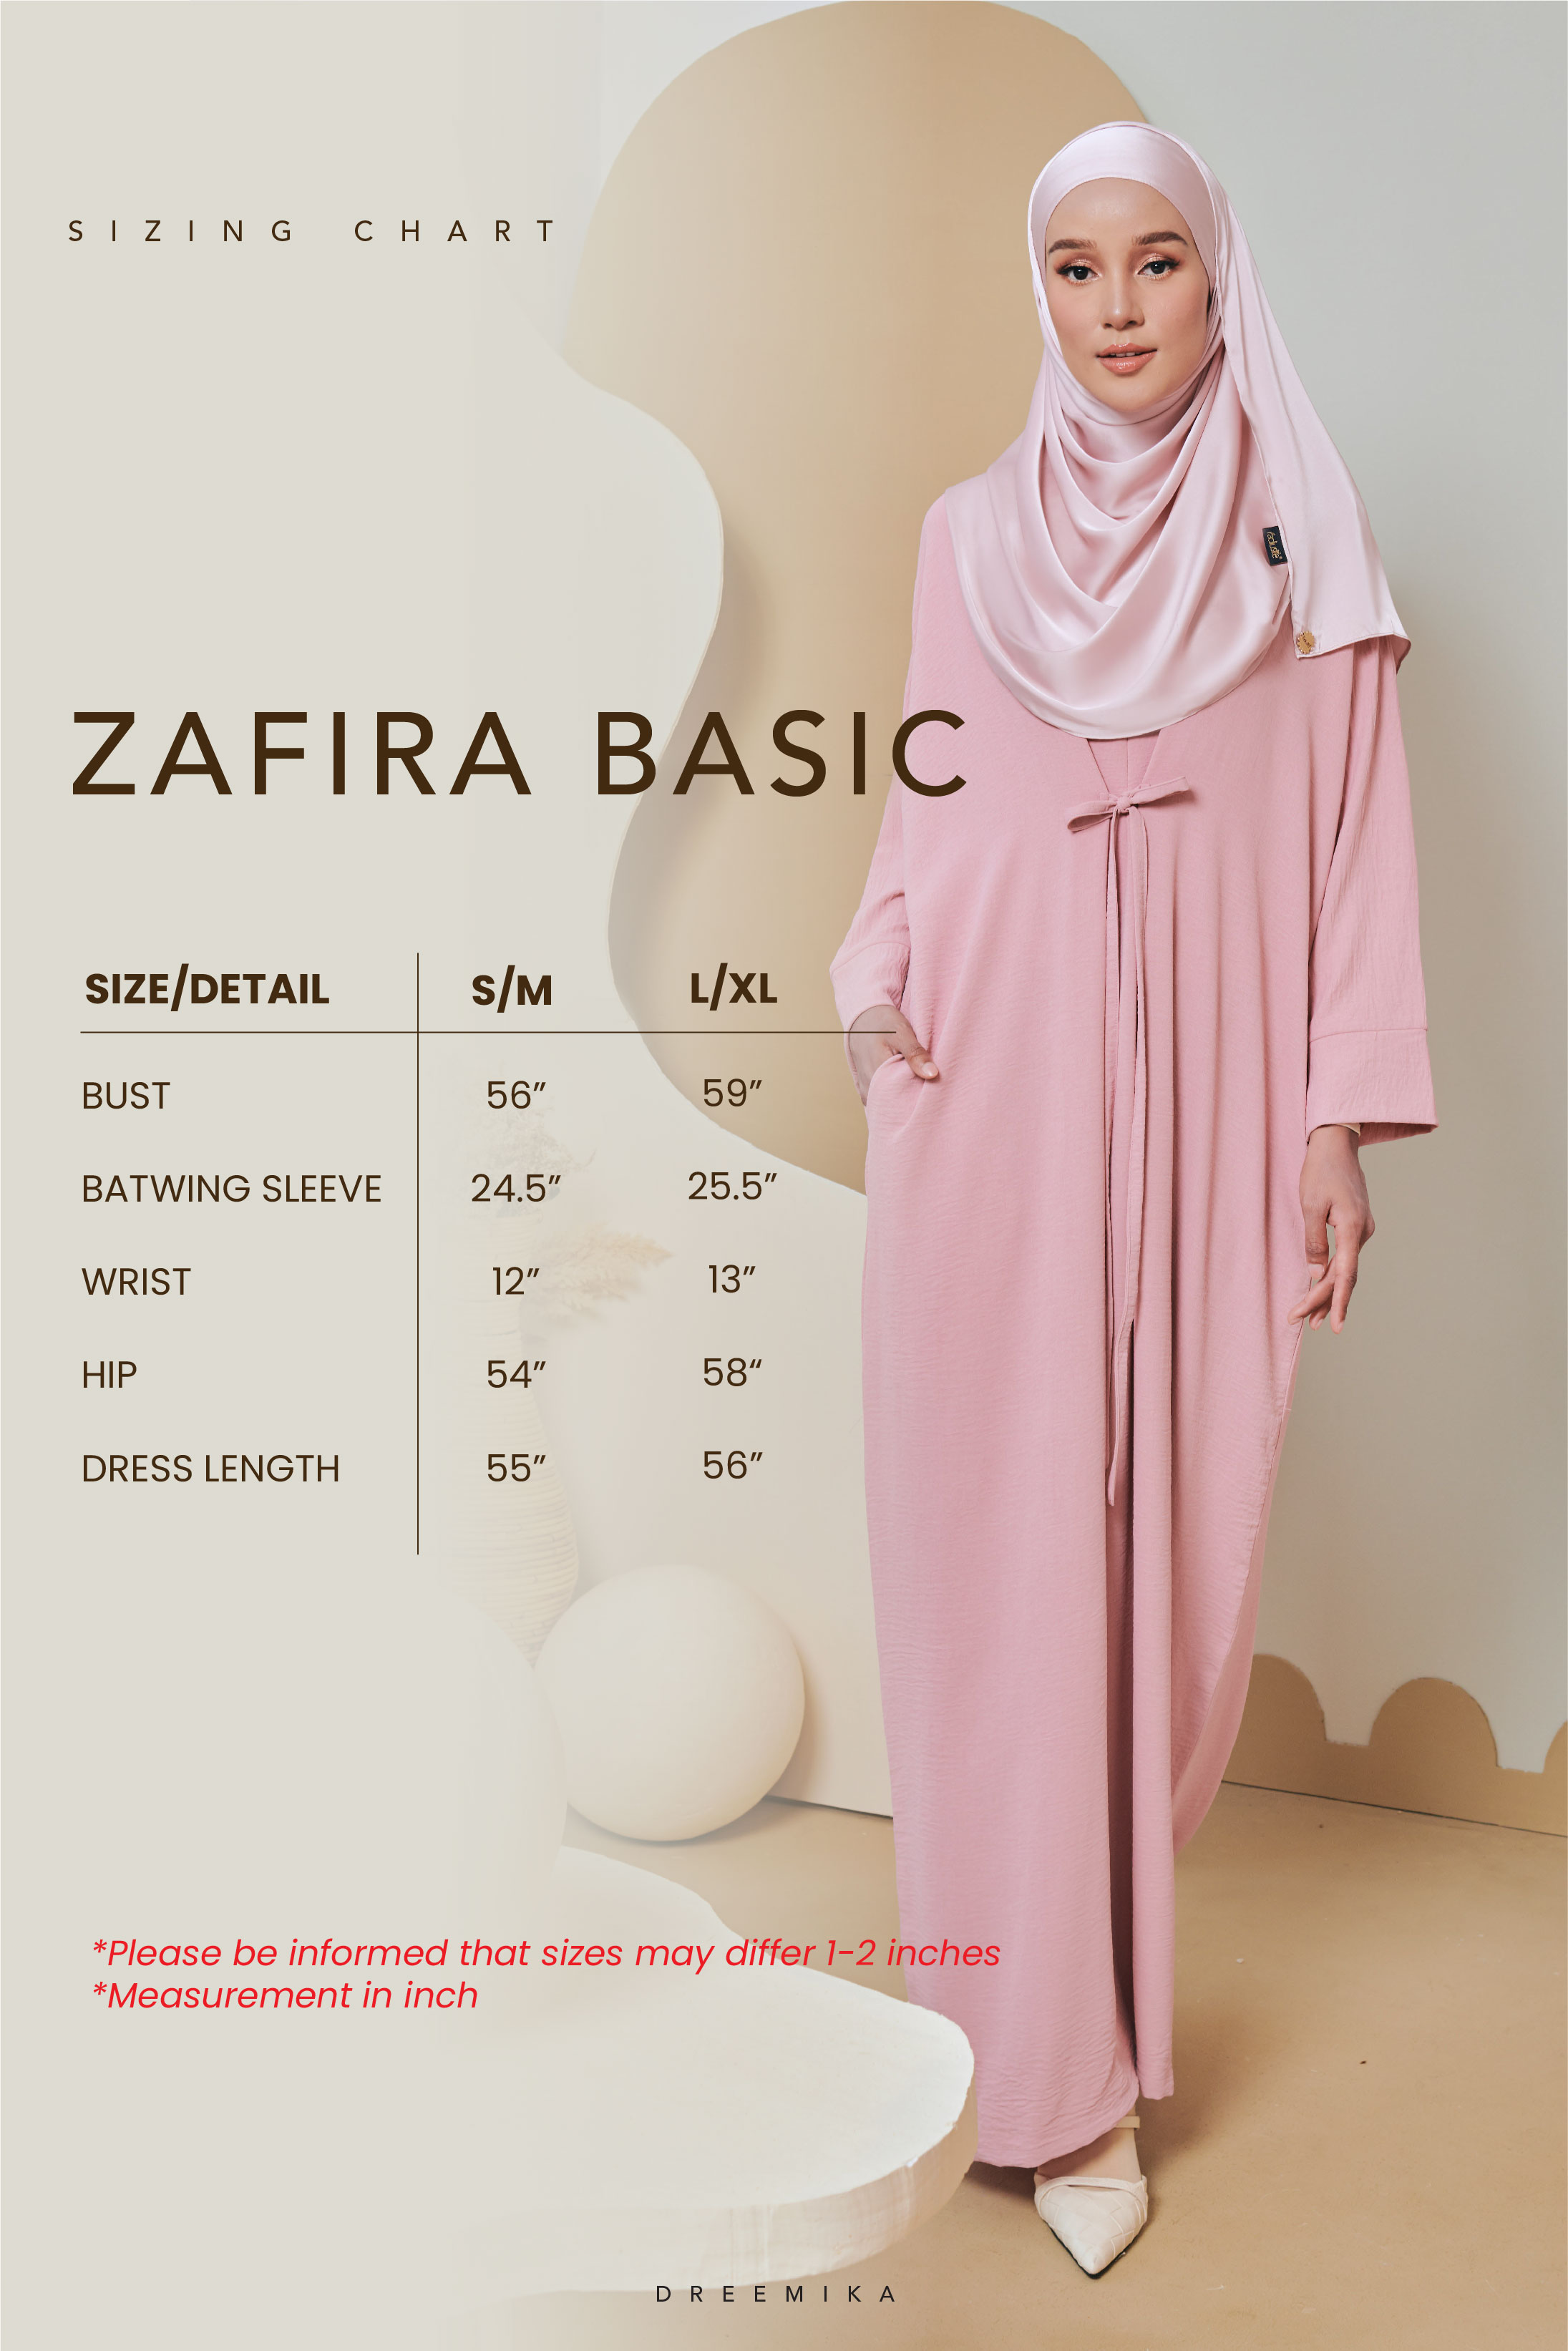 (AS-IS) Zafira Basic in Soft Green